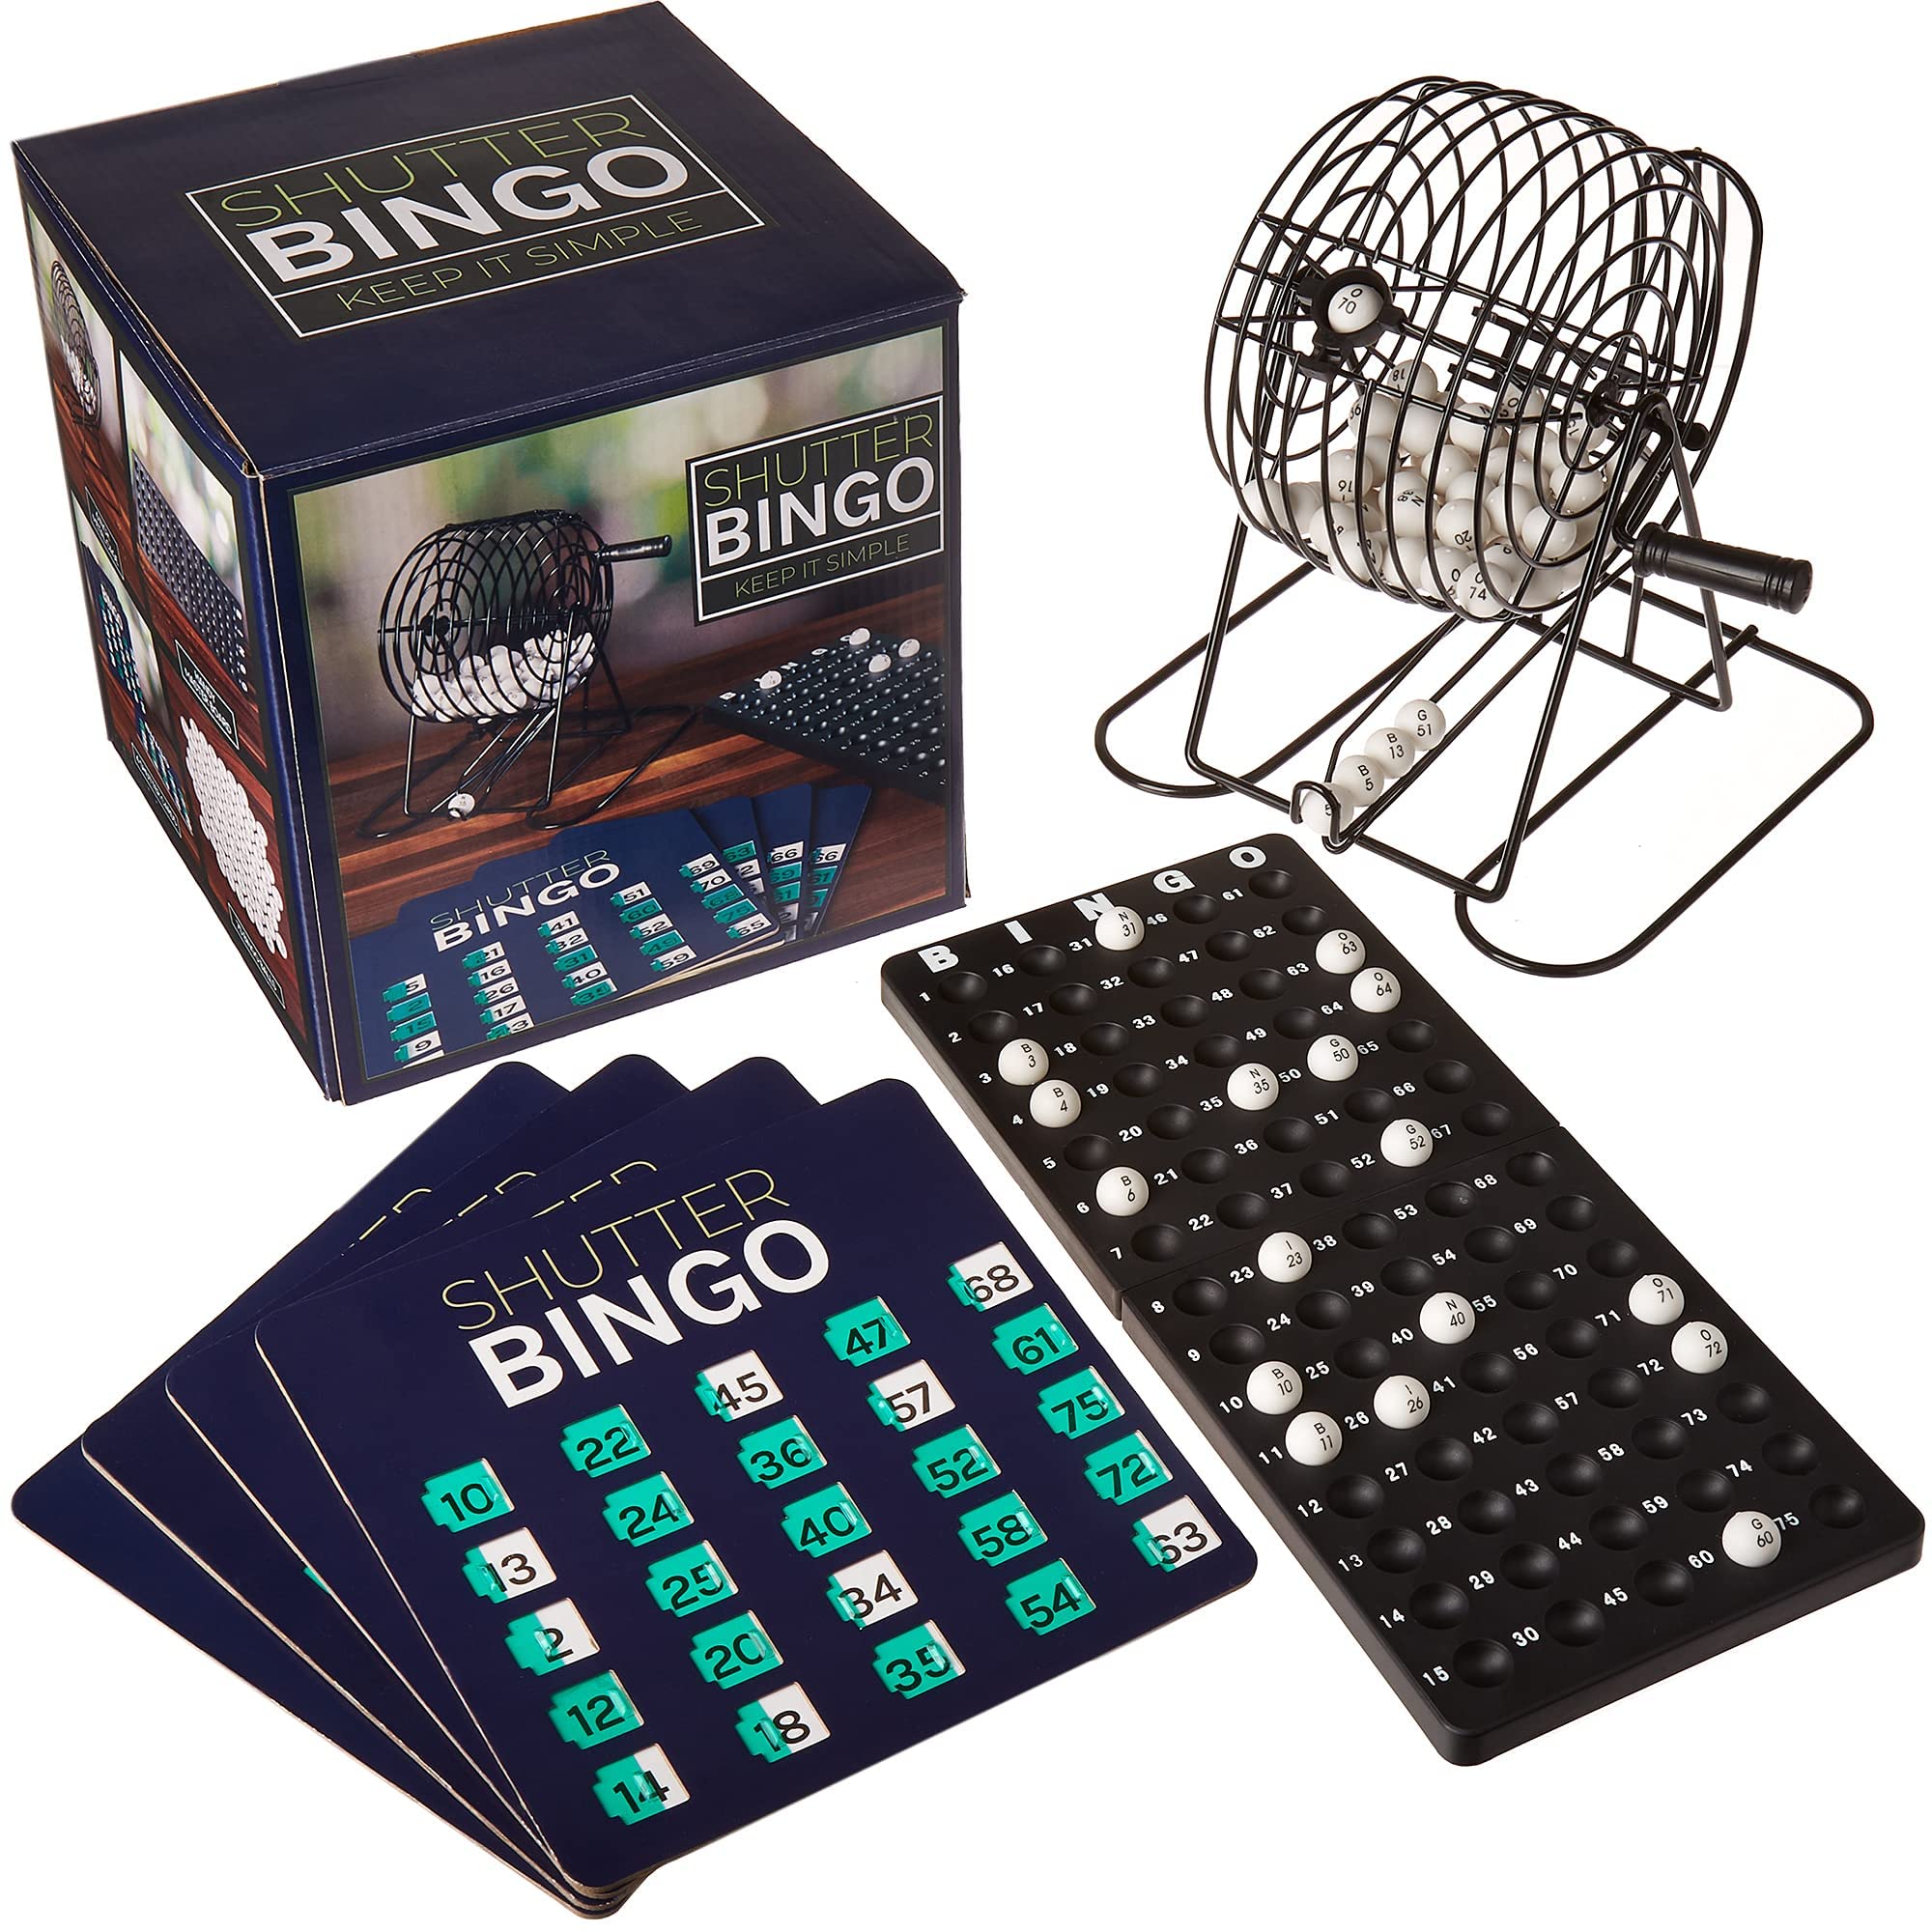 Shutter Bingo Set